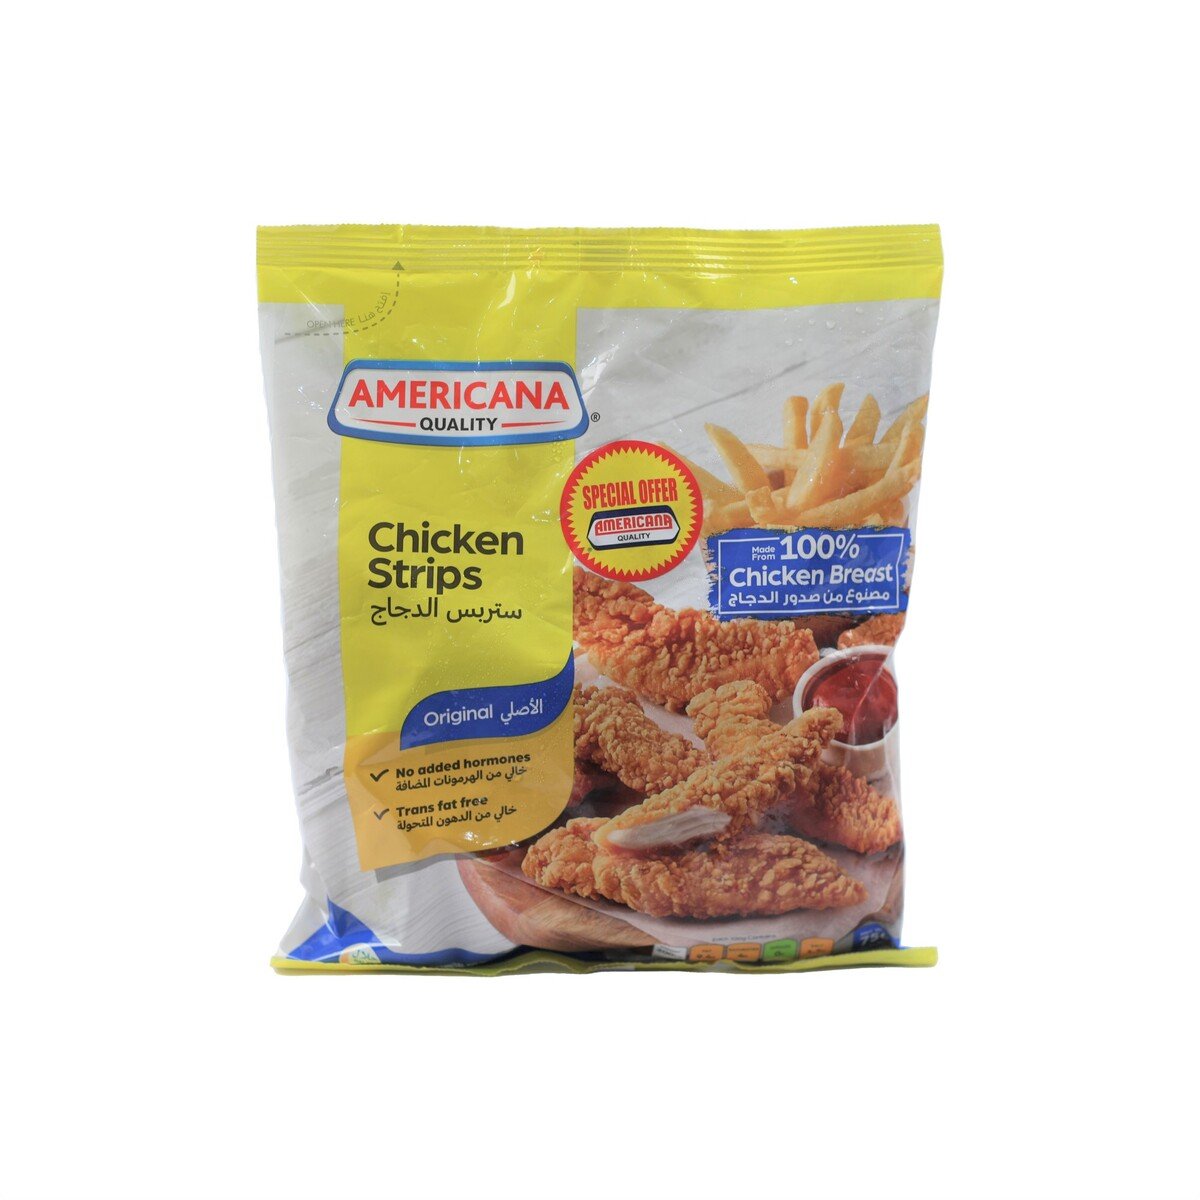 Americana Chicken Strips Original Value Pack 750 g